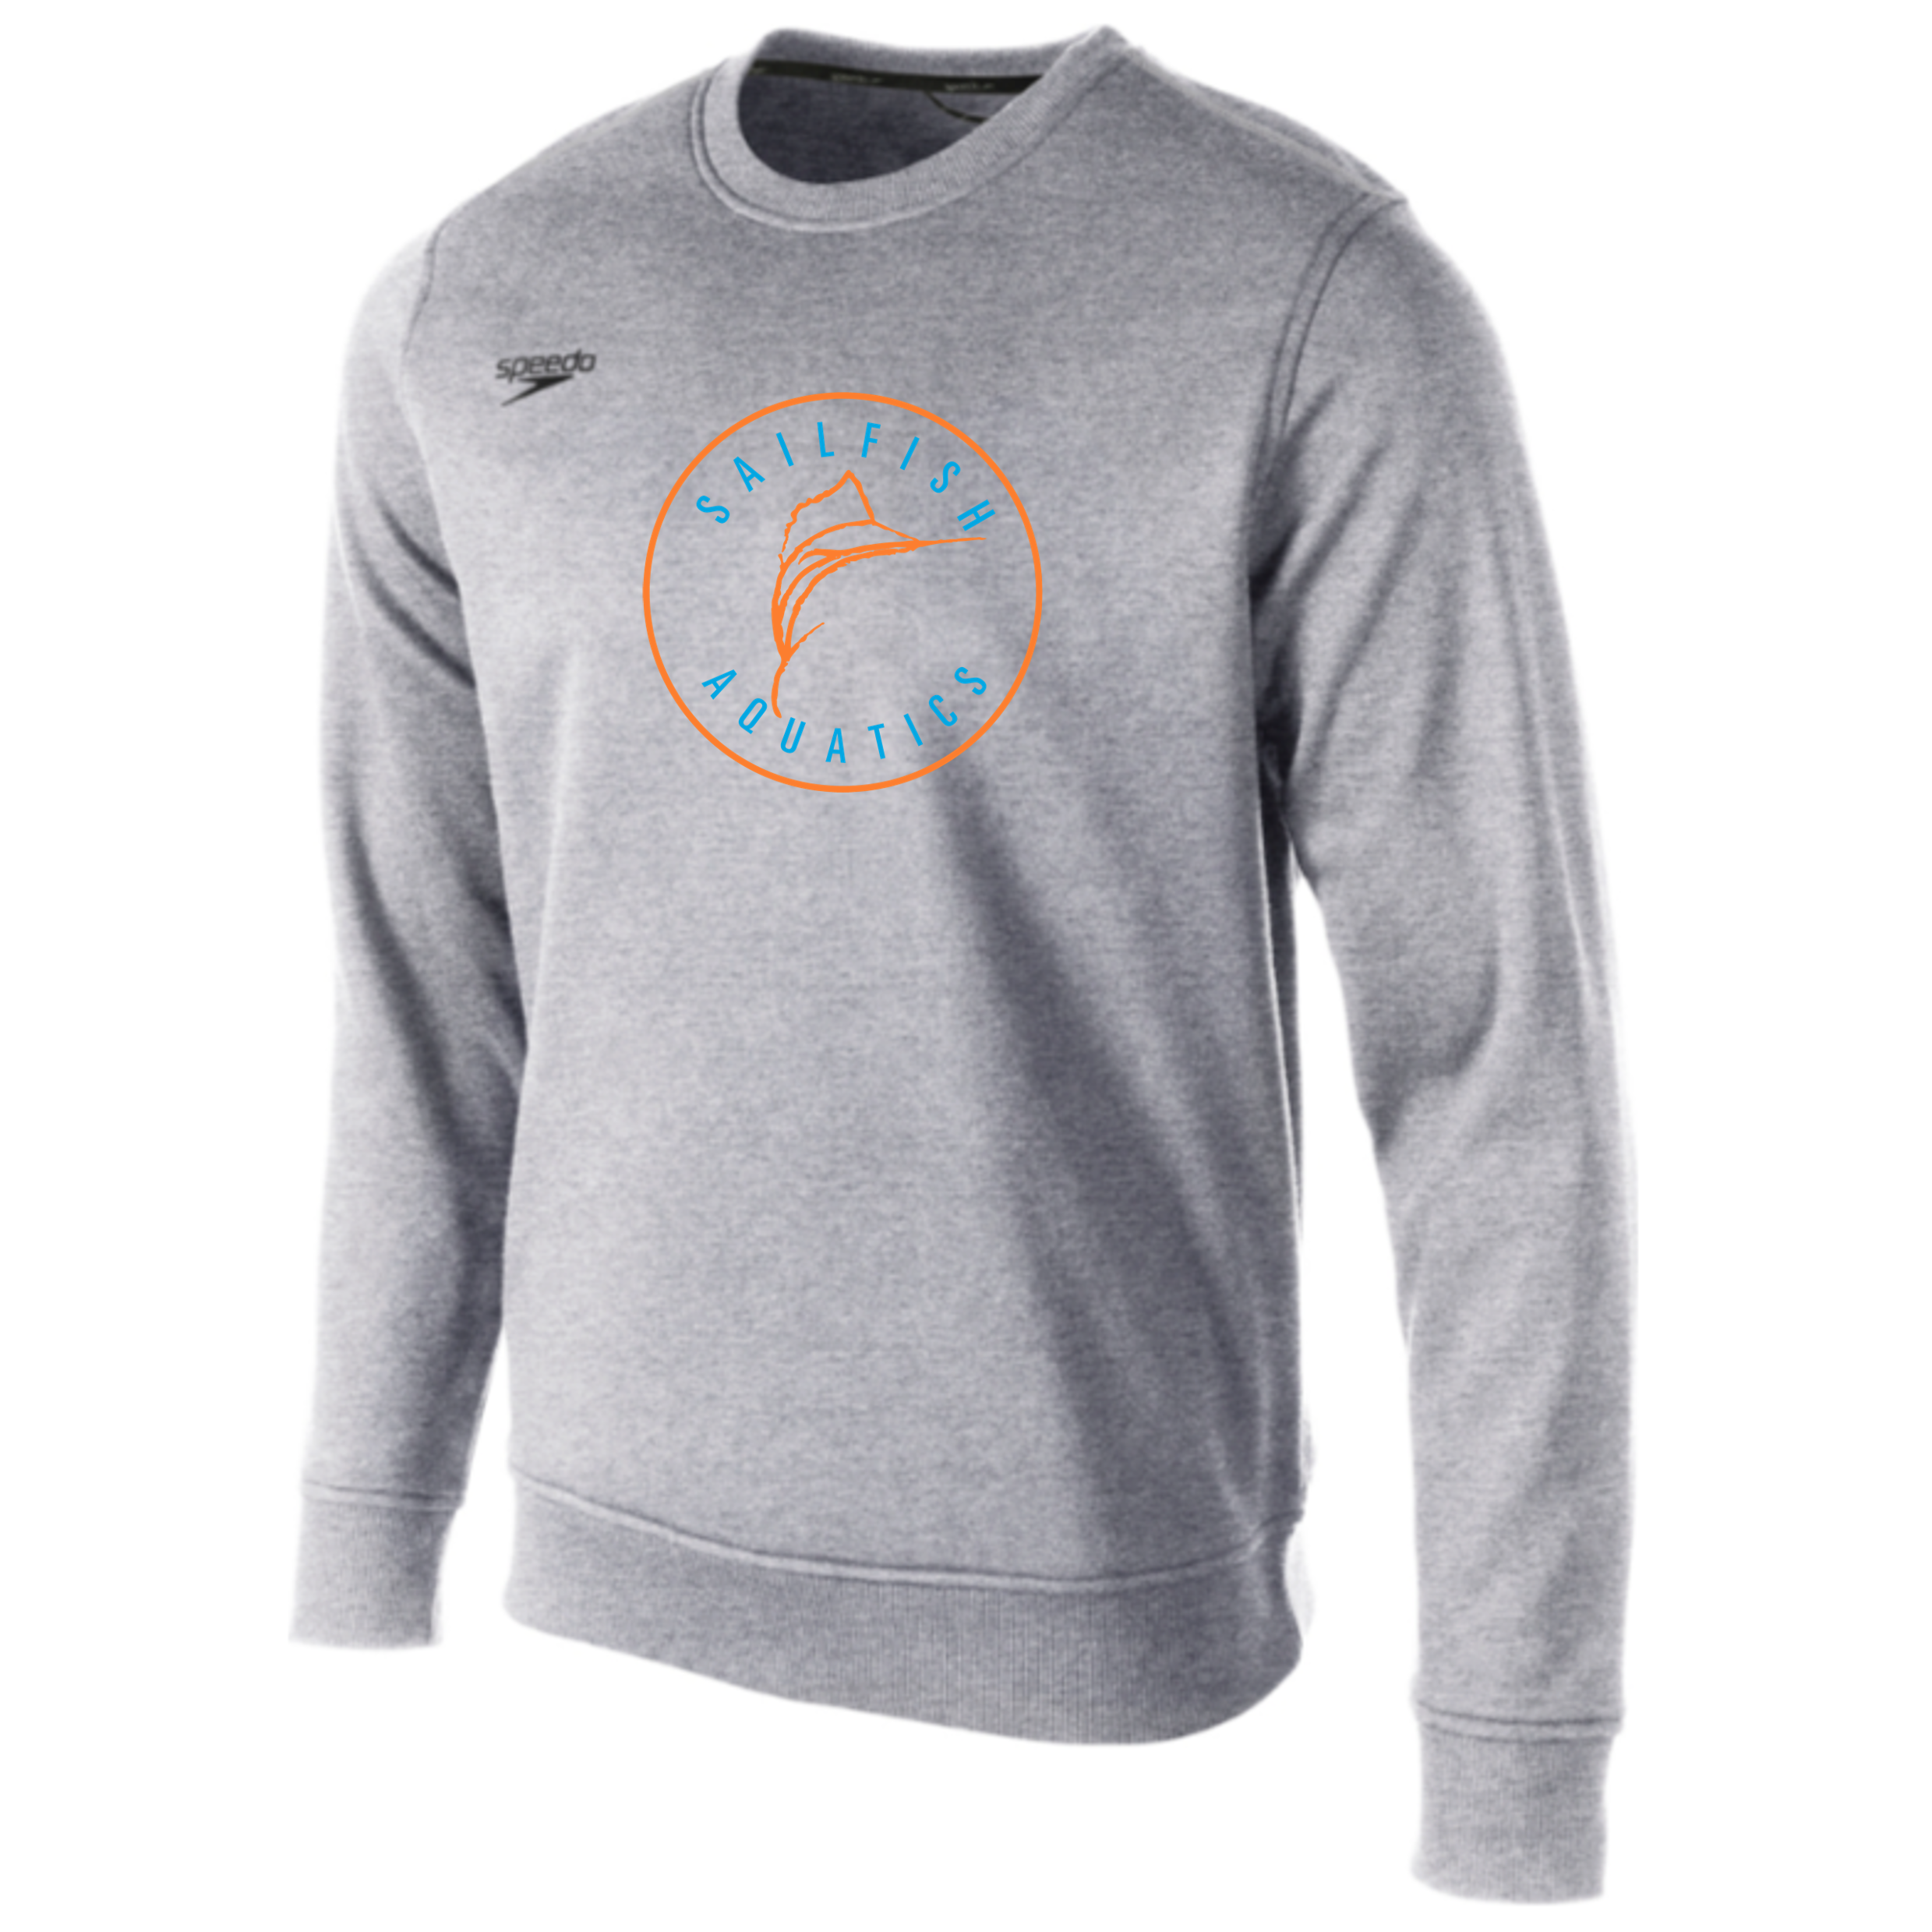 Speedo Fleece Crew Neck Sweatshirt (Customized) - Sailfish